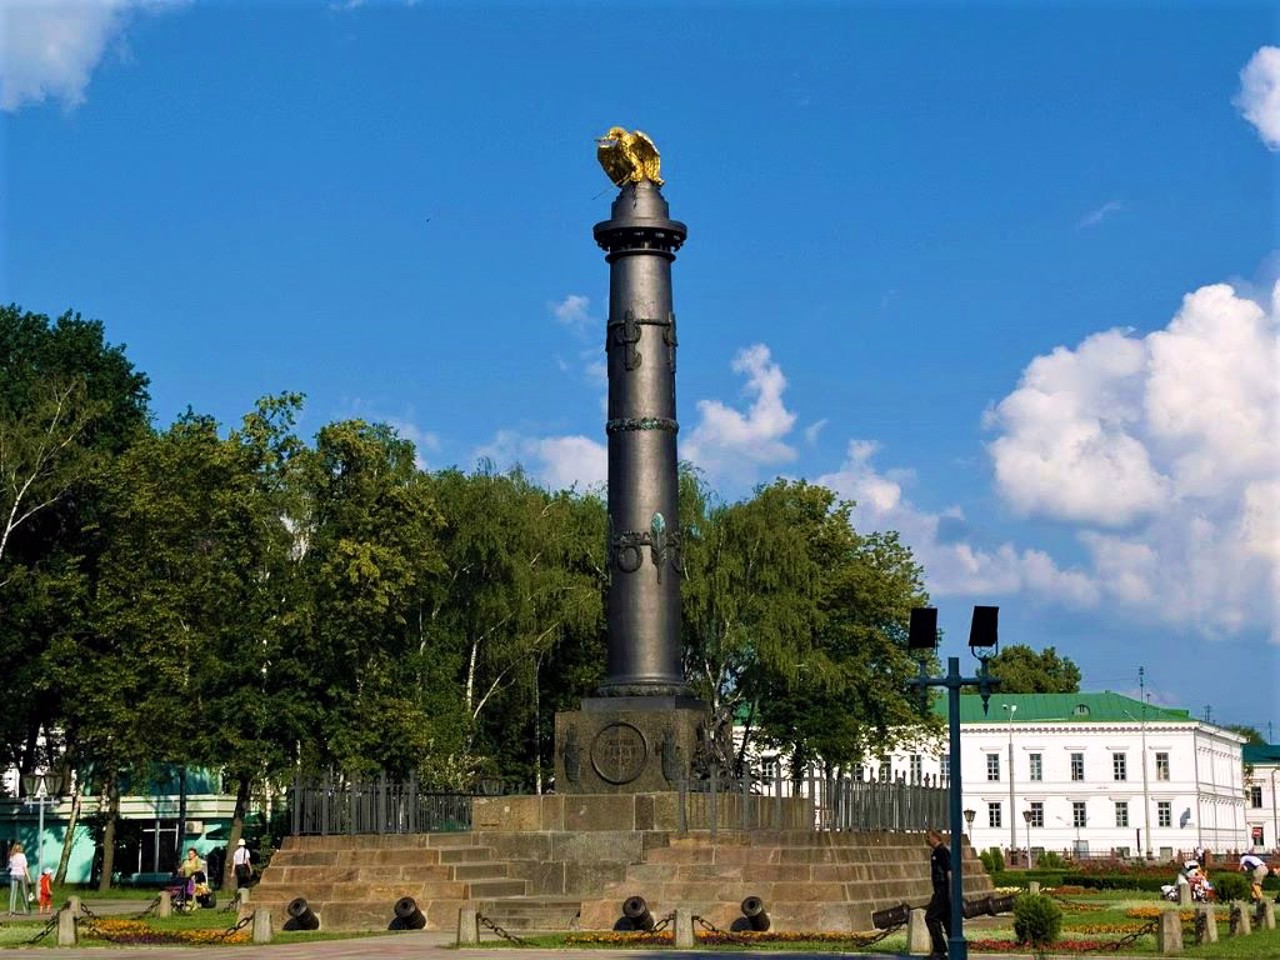 Round Square (Korpusny Garden), Poltava